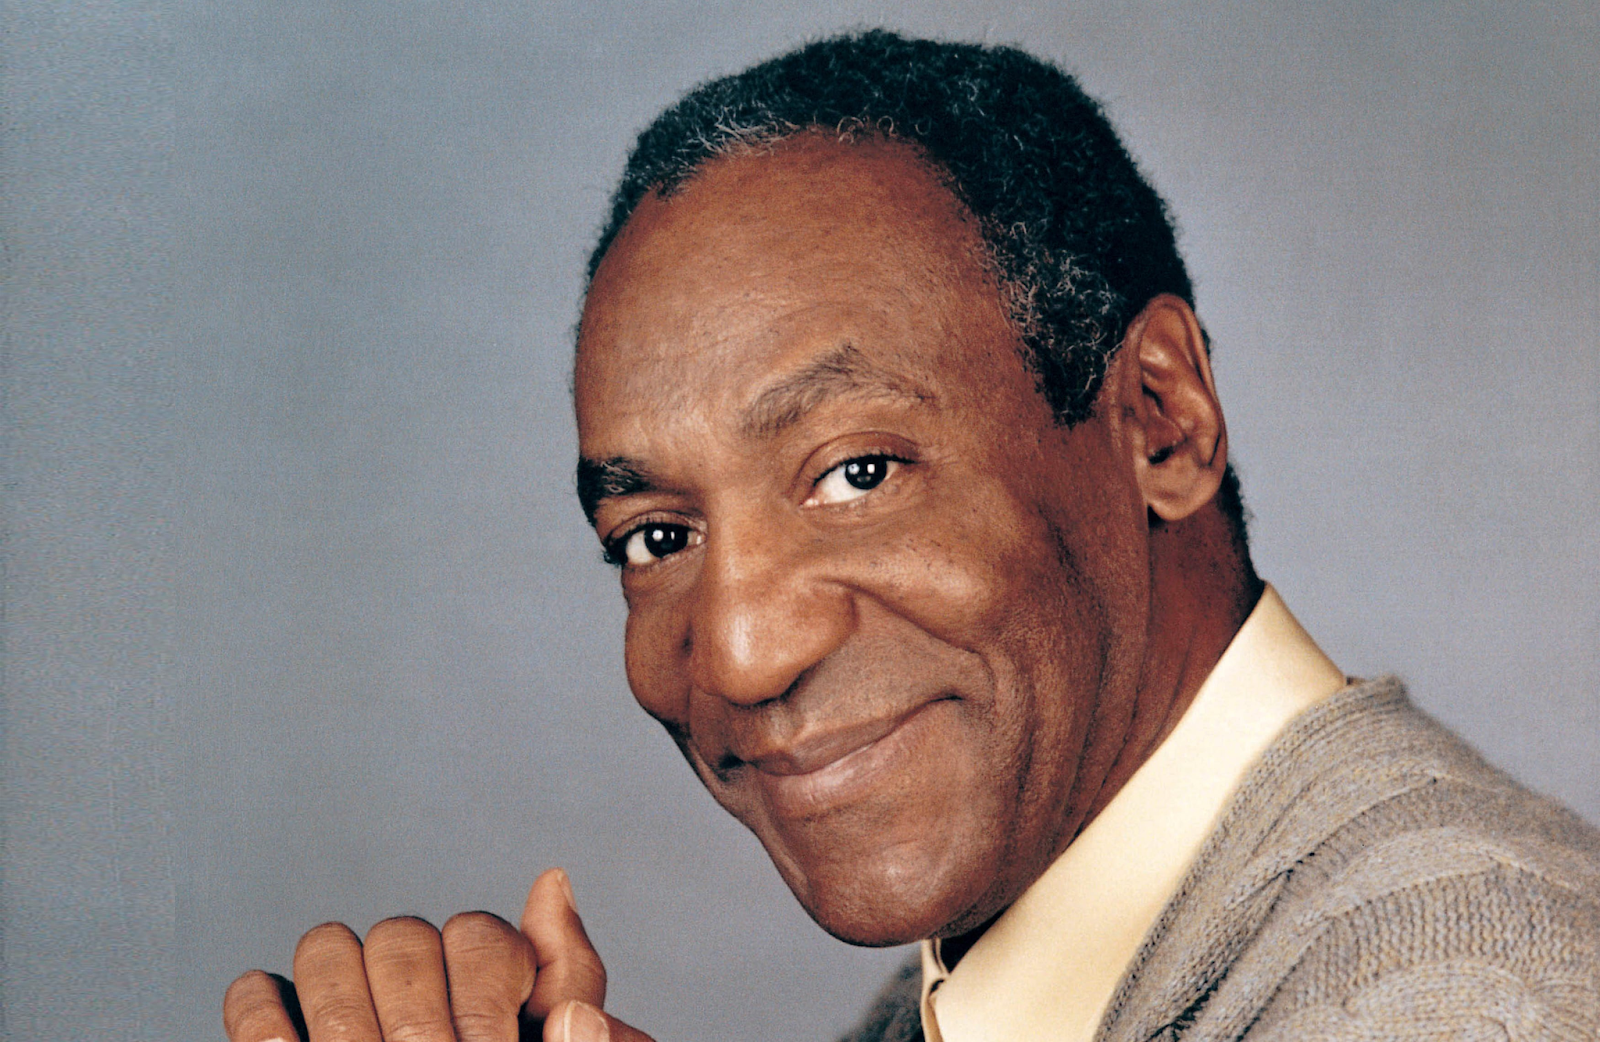 Bill Cosby Biography